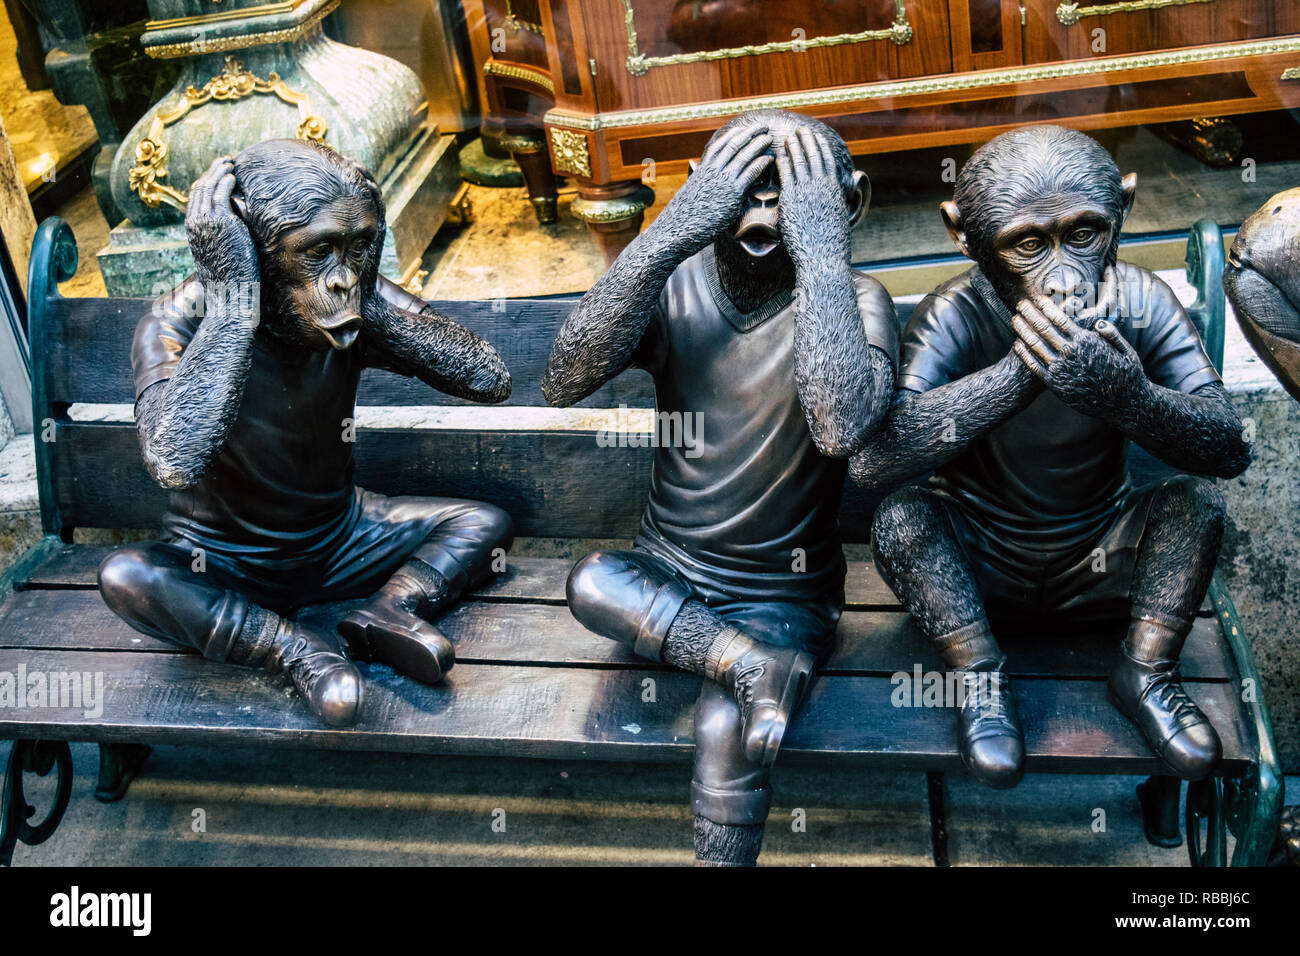 Hear No Evil Speak No Evil See No Evil 3 Wise Monkeys Statues In San Francisco Stock Photo Alamy